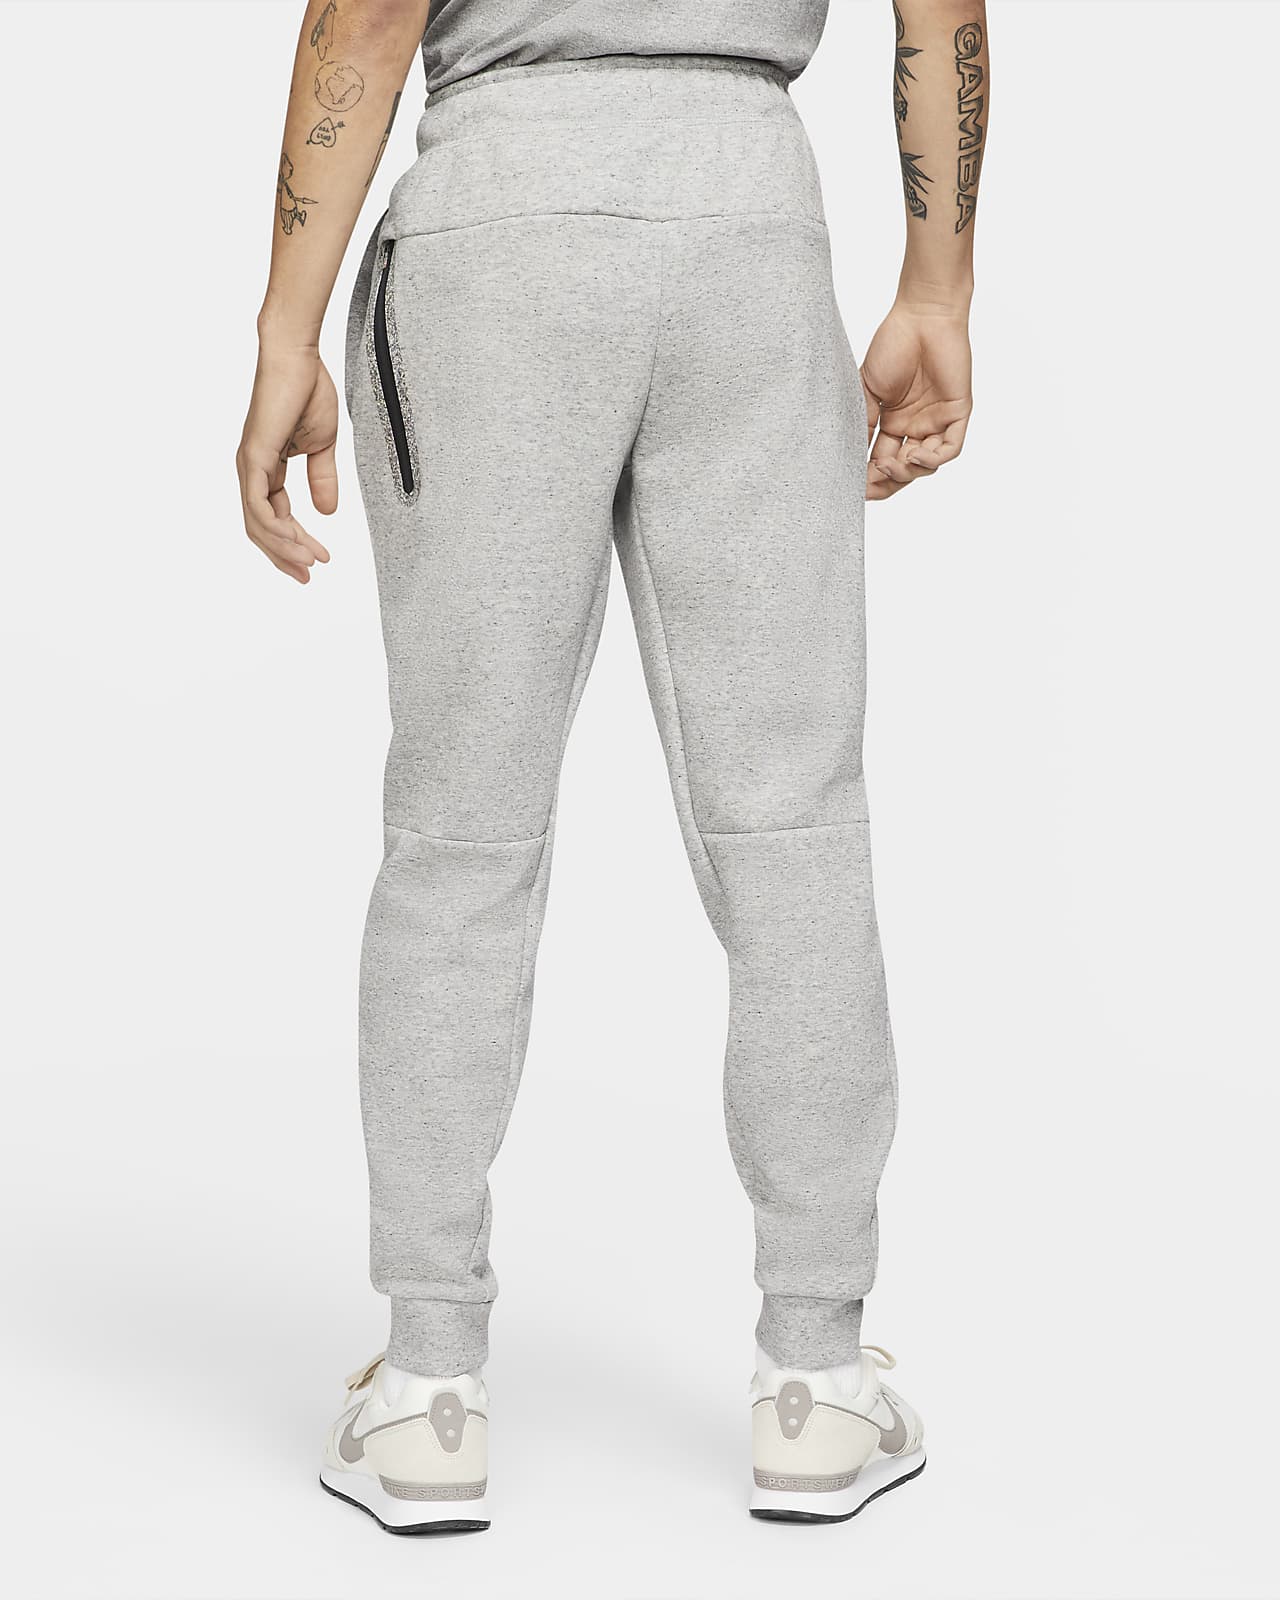 nike tech fleece pants white and grey